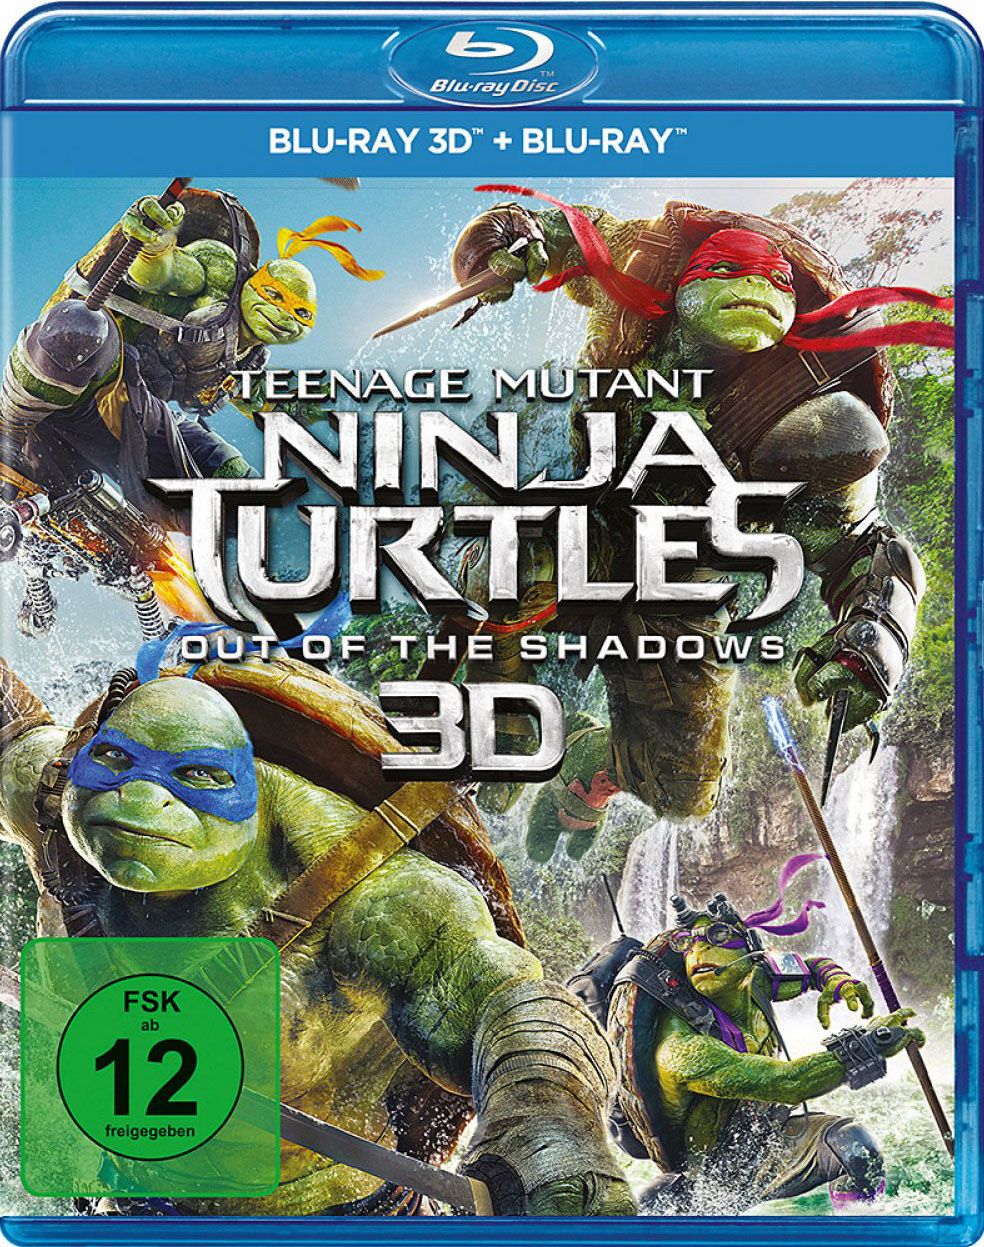 Teenage Mutant Ninja Turtles - Out of the Shadows 3D (2 Discs) (BLURAY + BLURAY 3D)